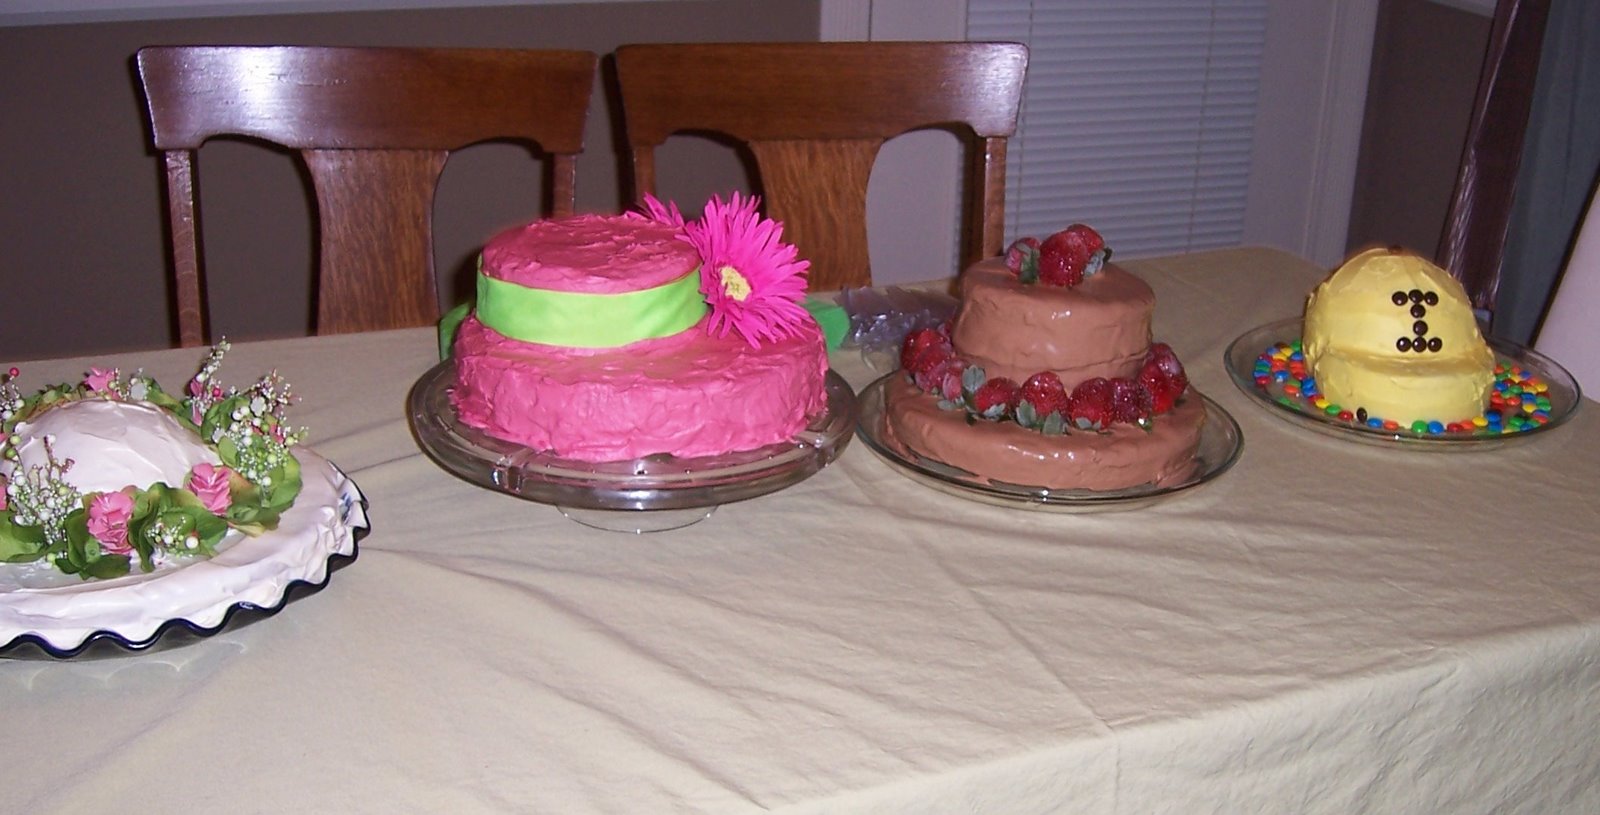 [Cakes+on+table+-+blog.jpg]